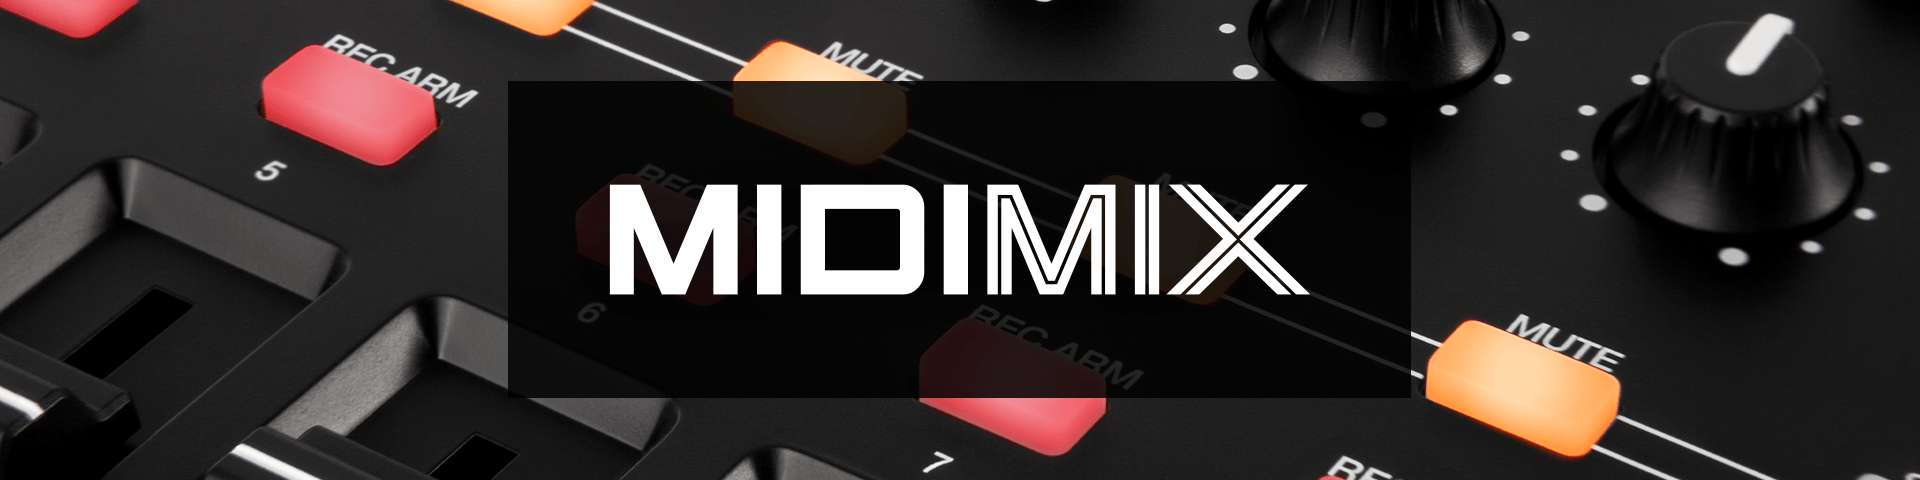 MIDIMIX Control Surface | Akai Pro